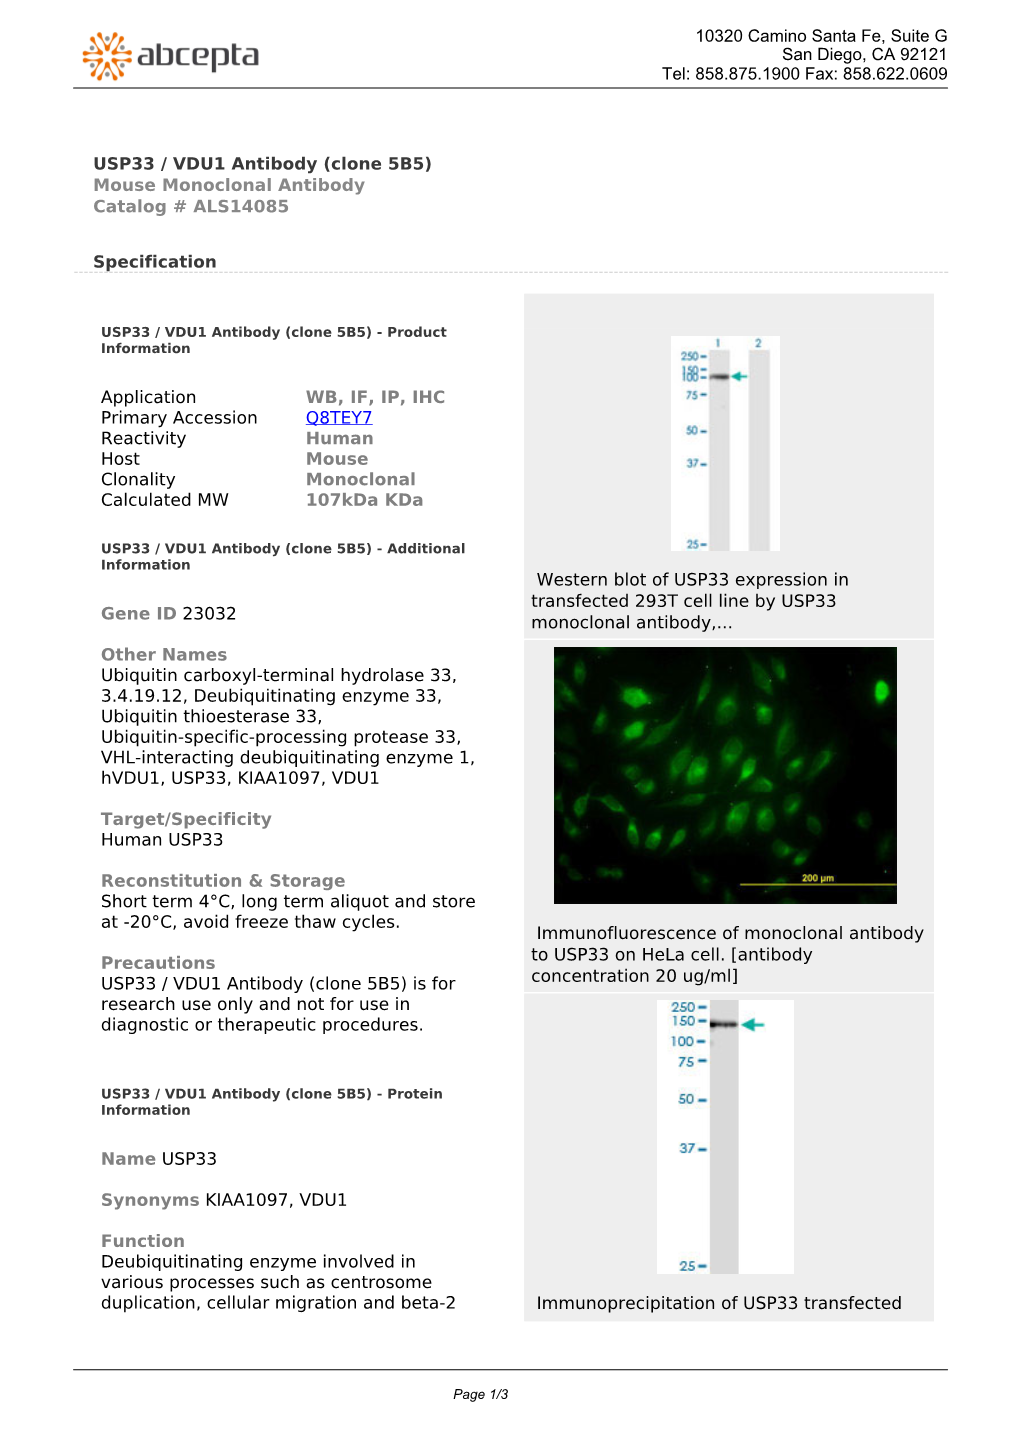 USP33 / VDU1 Antibody (Clone 5B5) Mouse Monoclonal Antibody Catalog # ALS14085